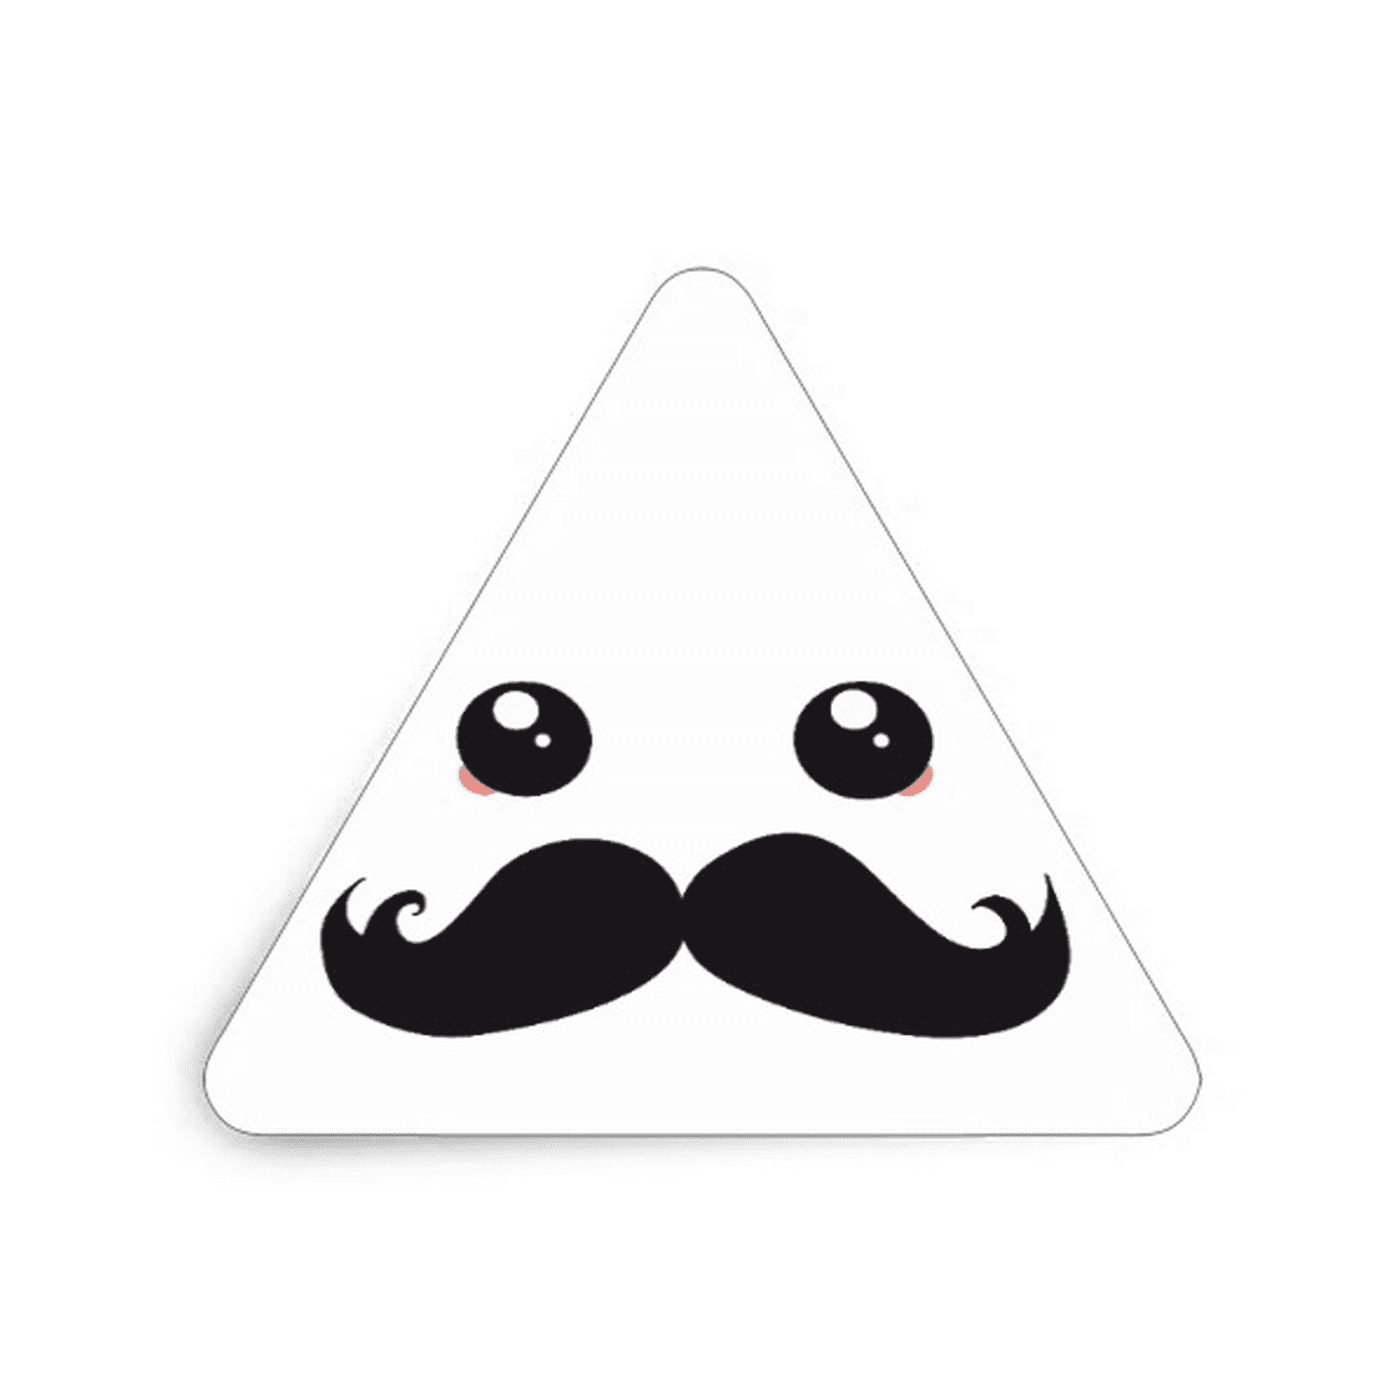  A triangular sticker with a mustache 